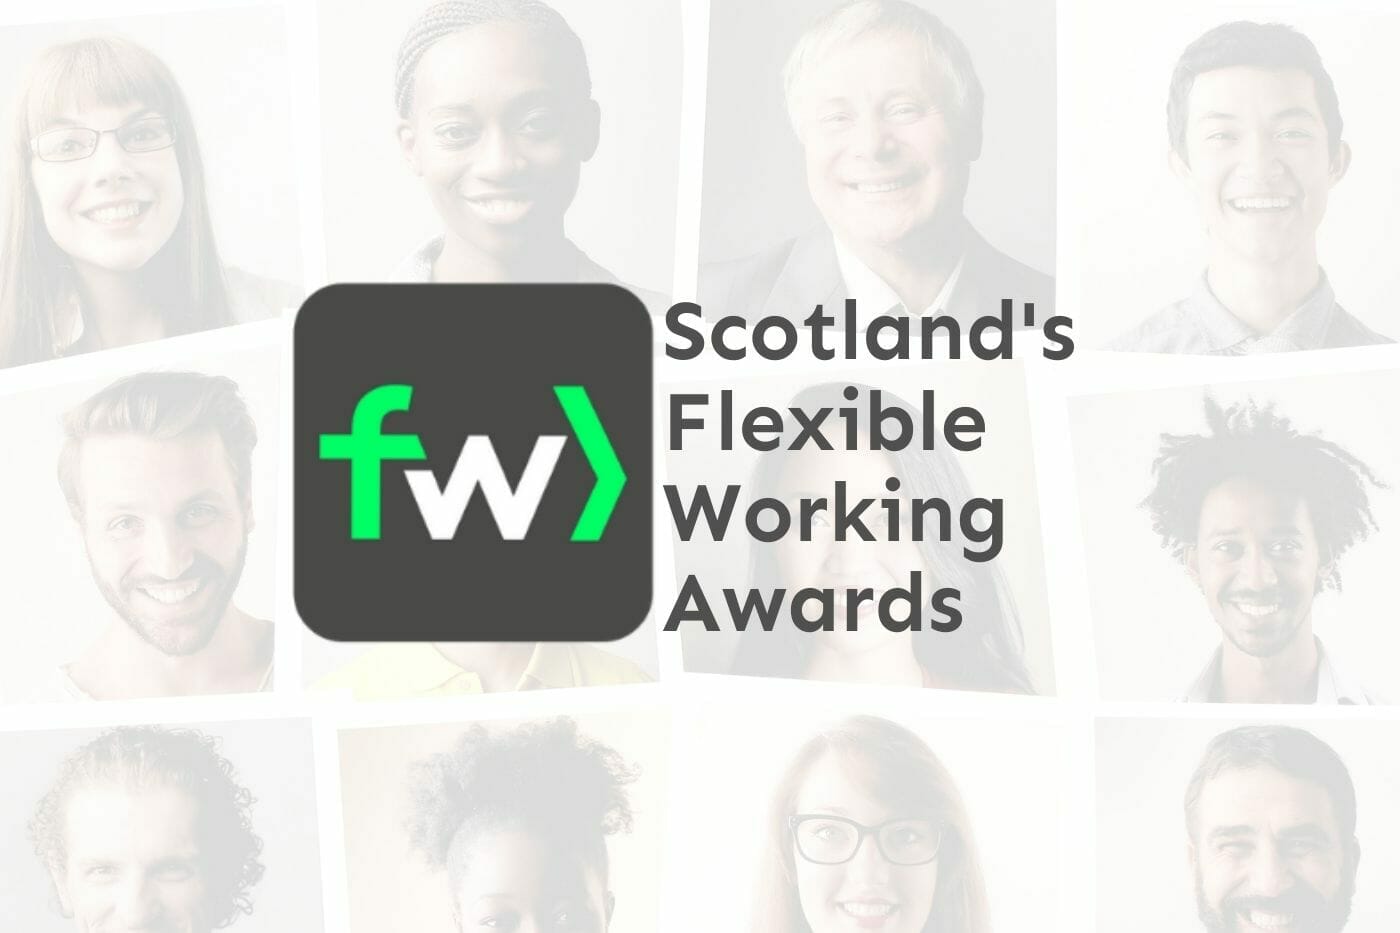 Scotland's Flexible Working Awards